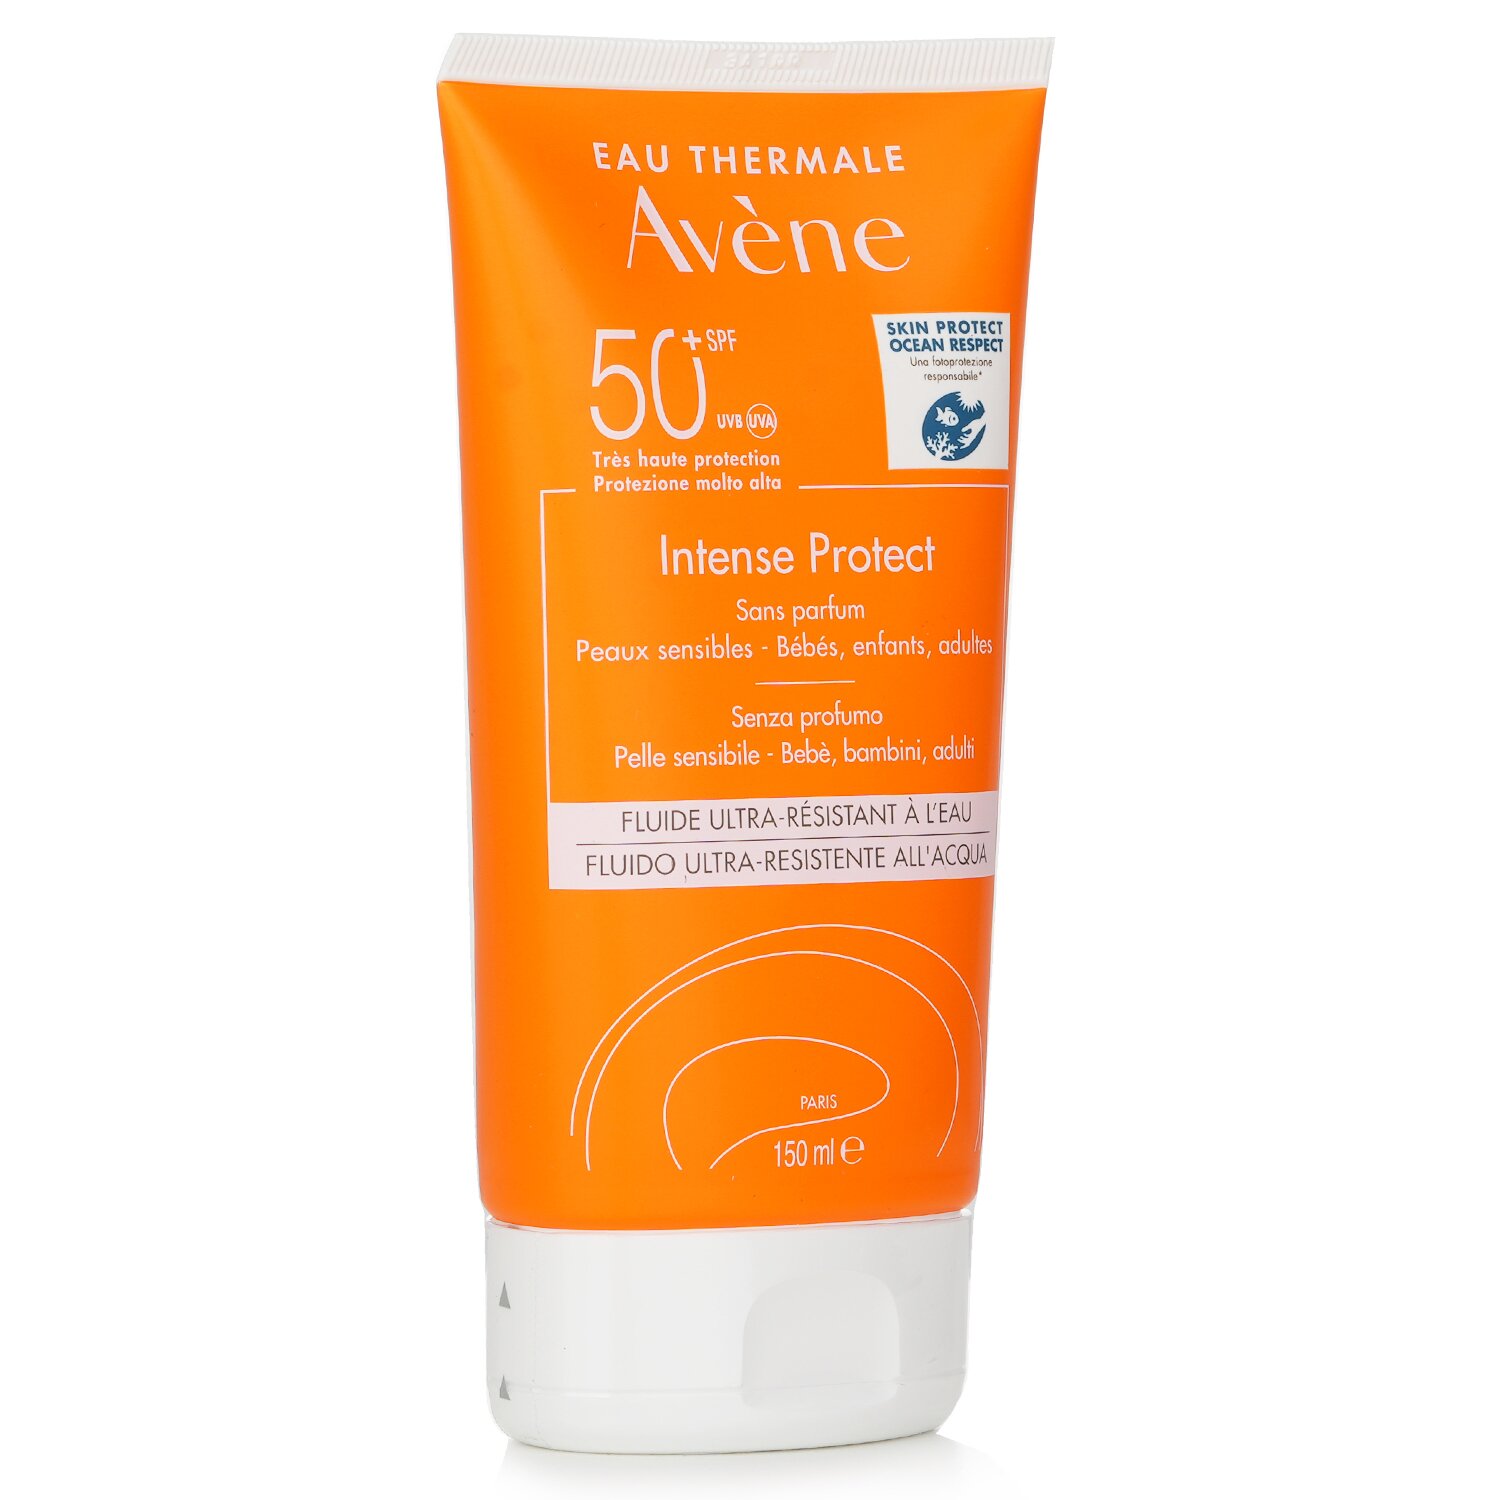 Avene Intense Protect SPF 50 (For Babies, Children, Adult) - For Sensitive Skin קרם הגנה מהשמש לעור רגיש 150ml/5oz